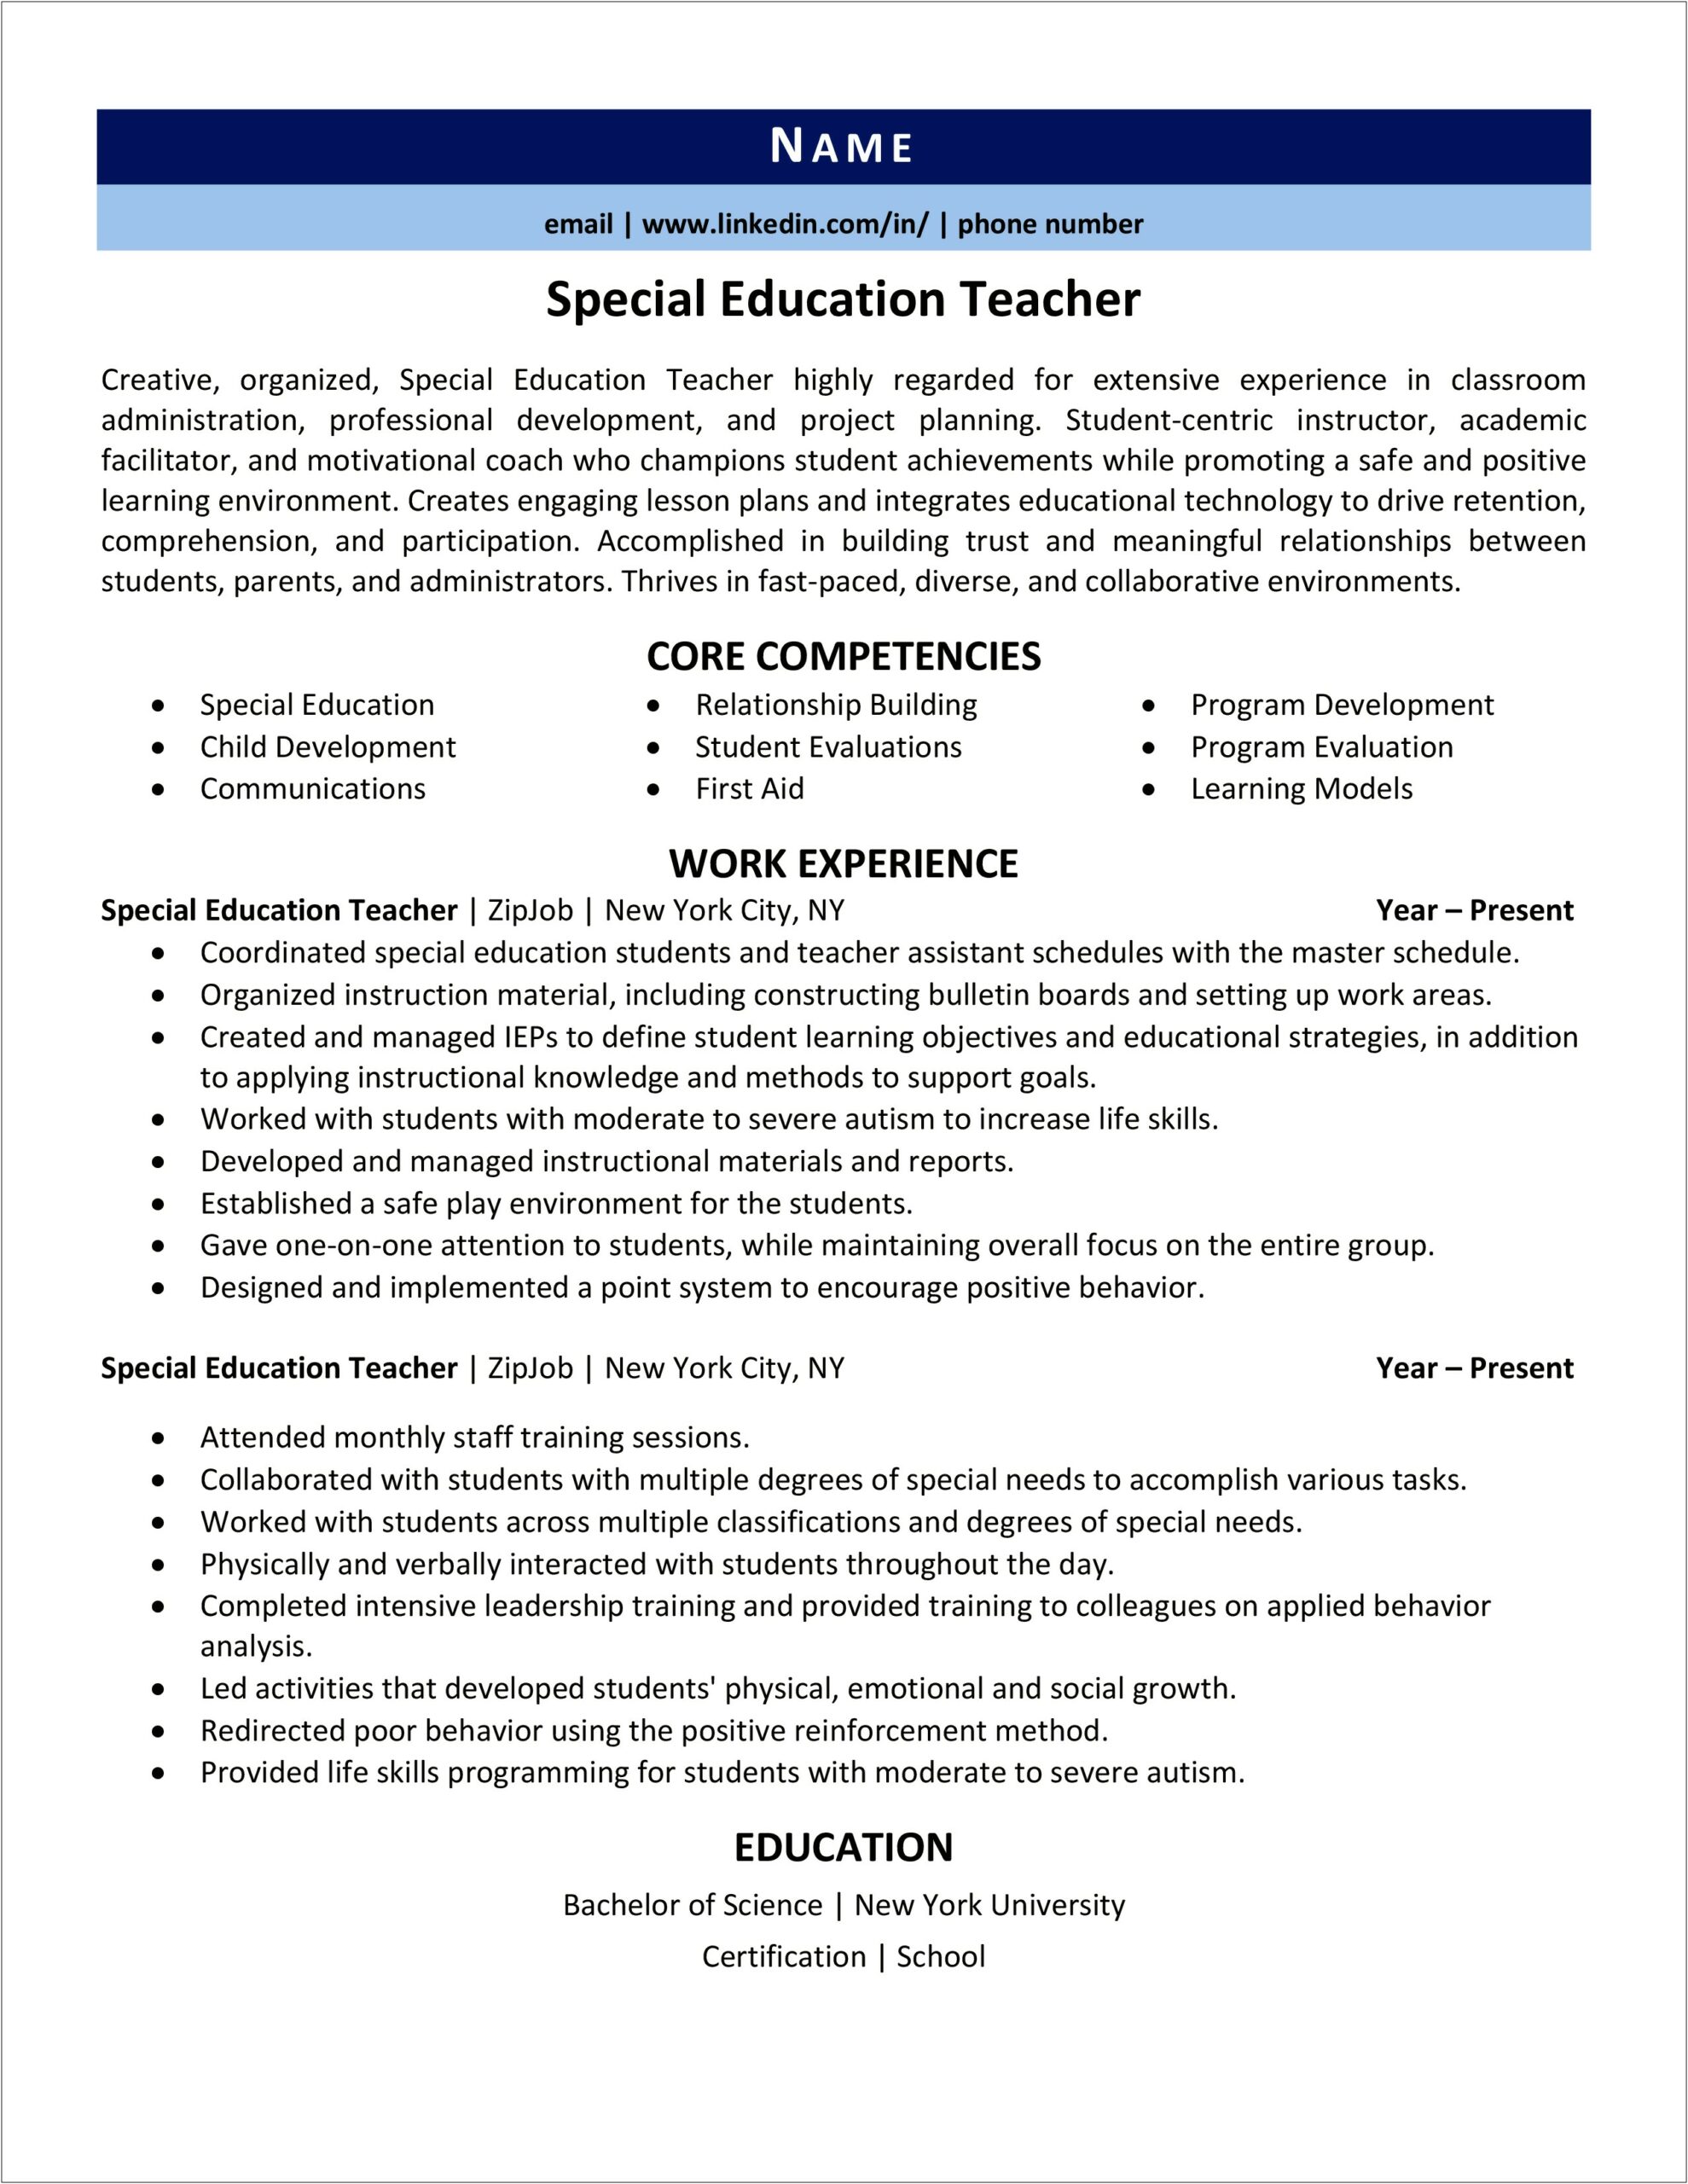 Special Education Teacher Summary For Resume